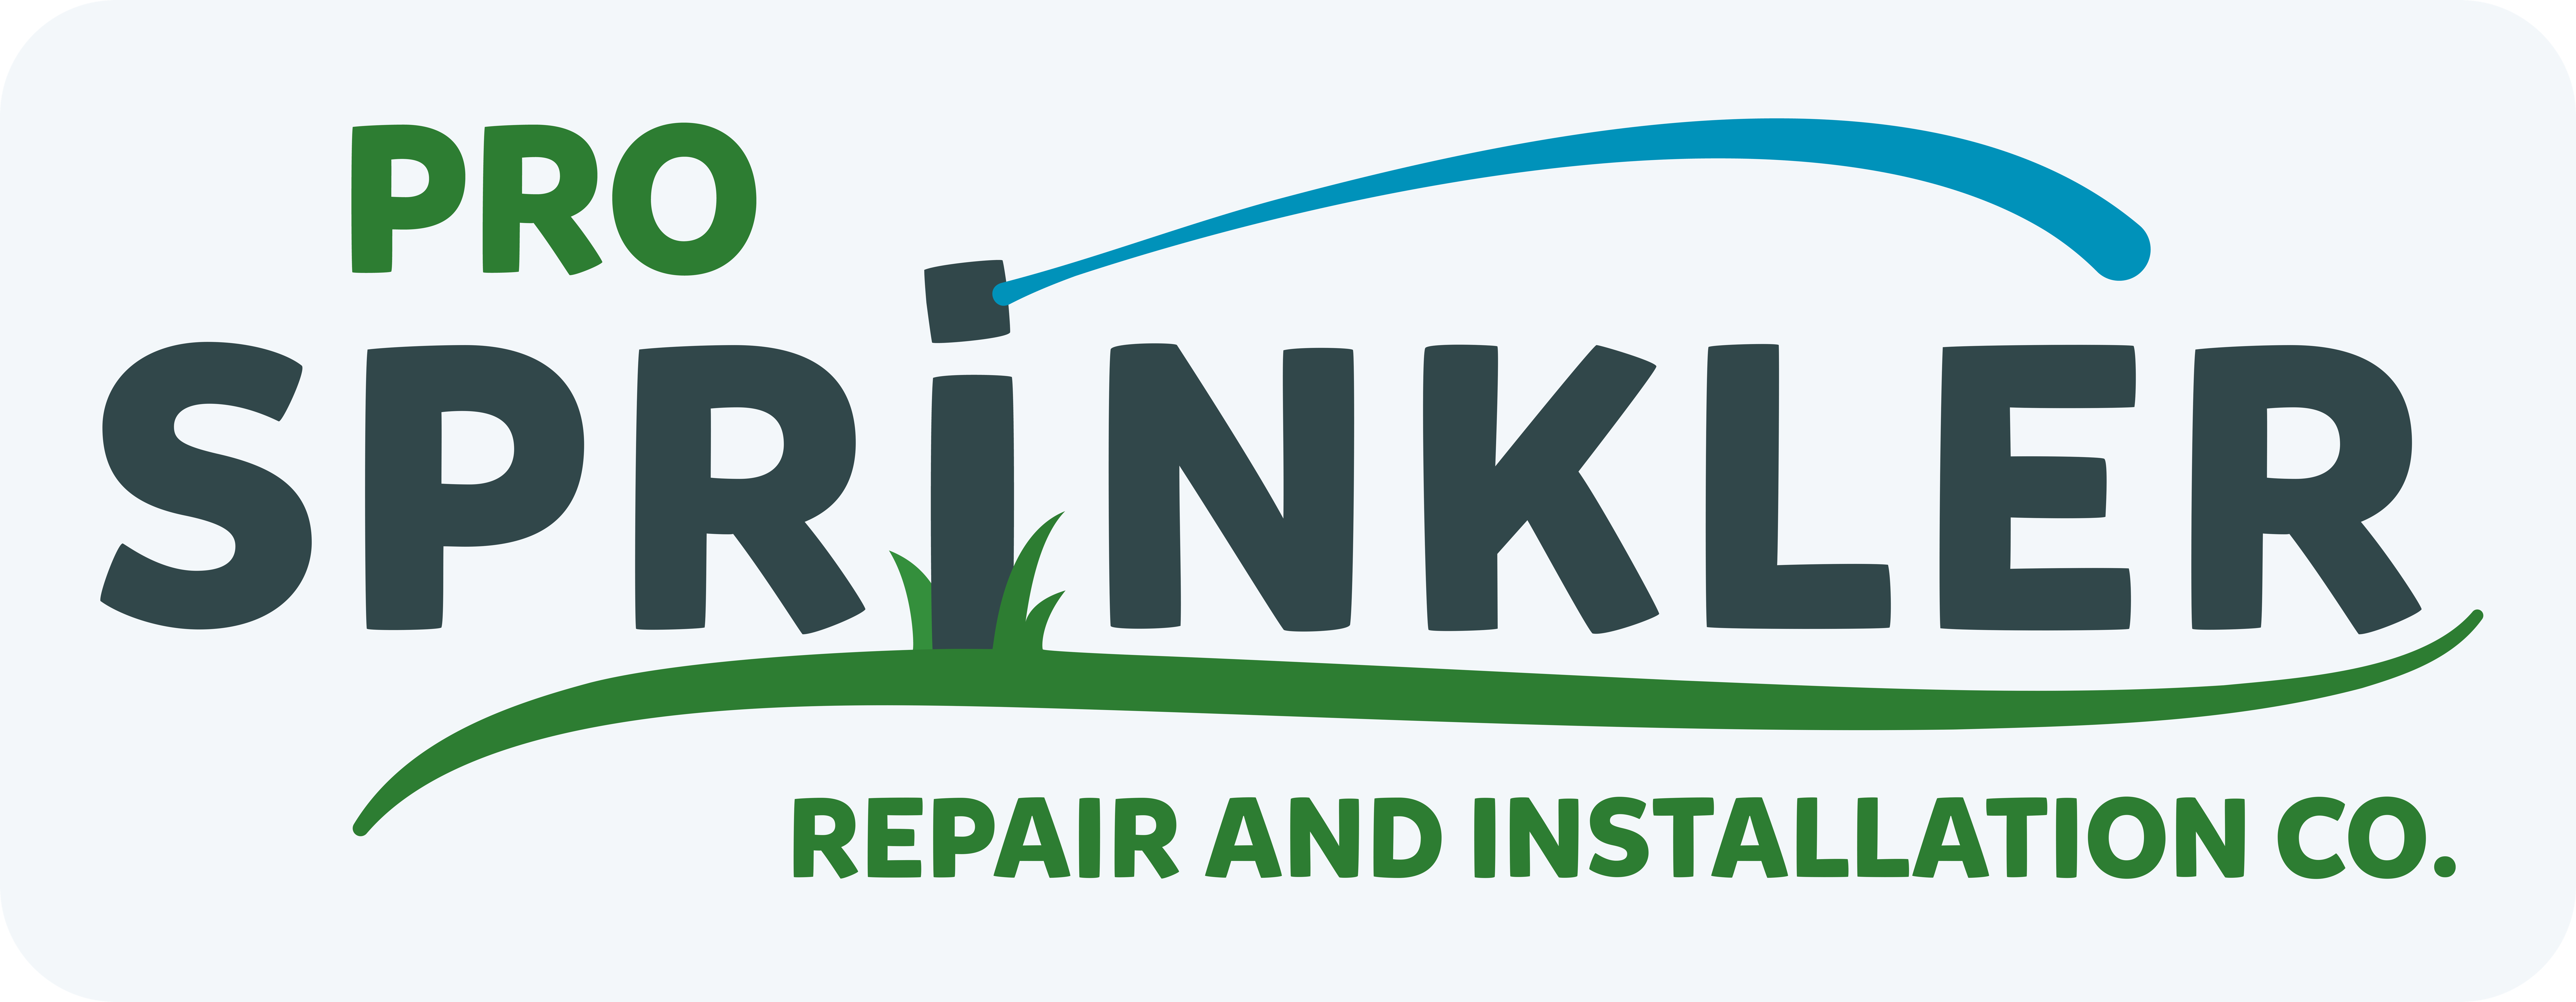 Pro Sprinkler Repair And Installation Logo